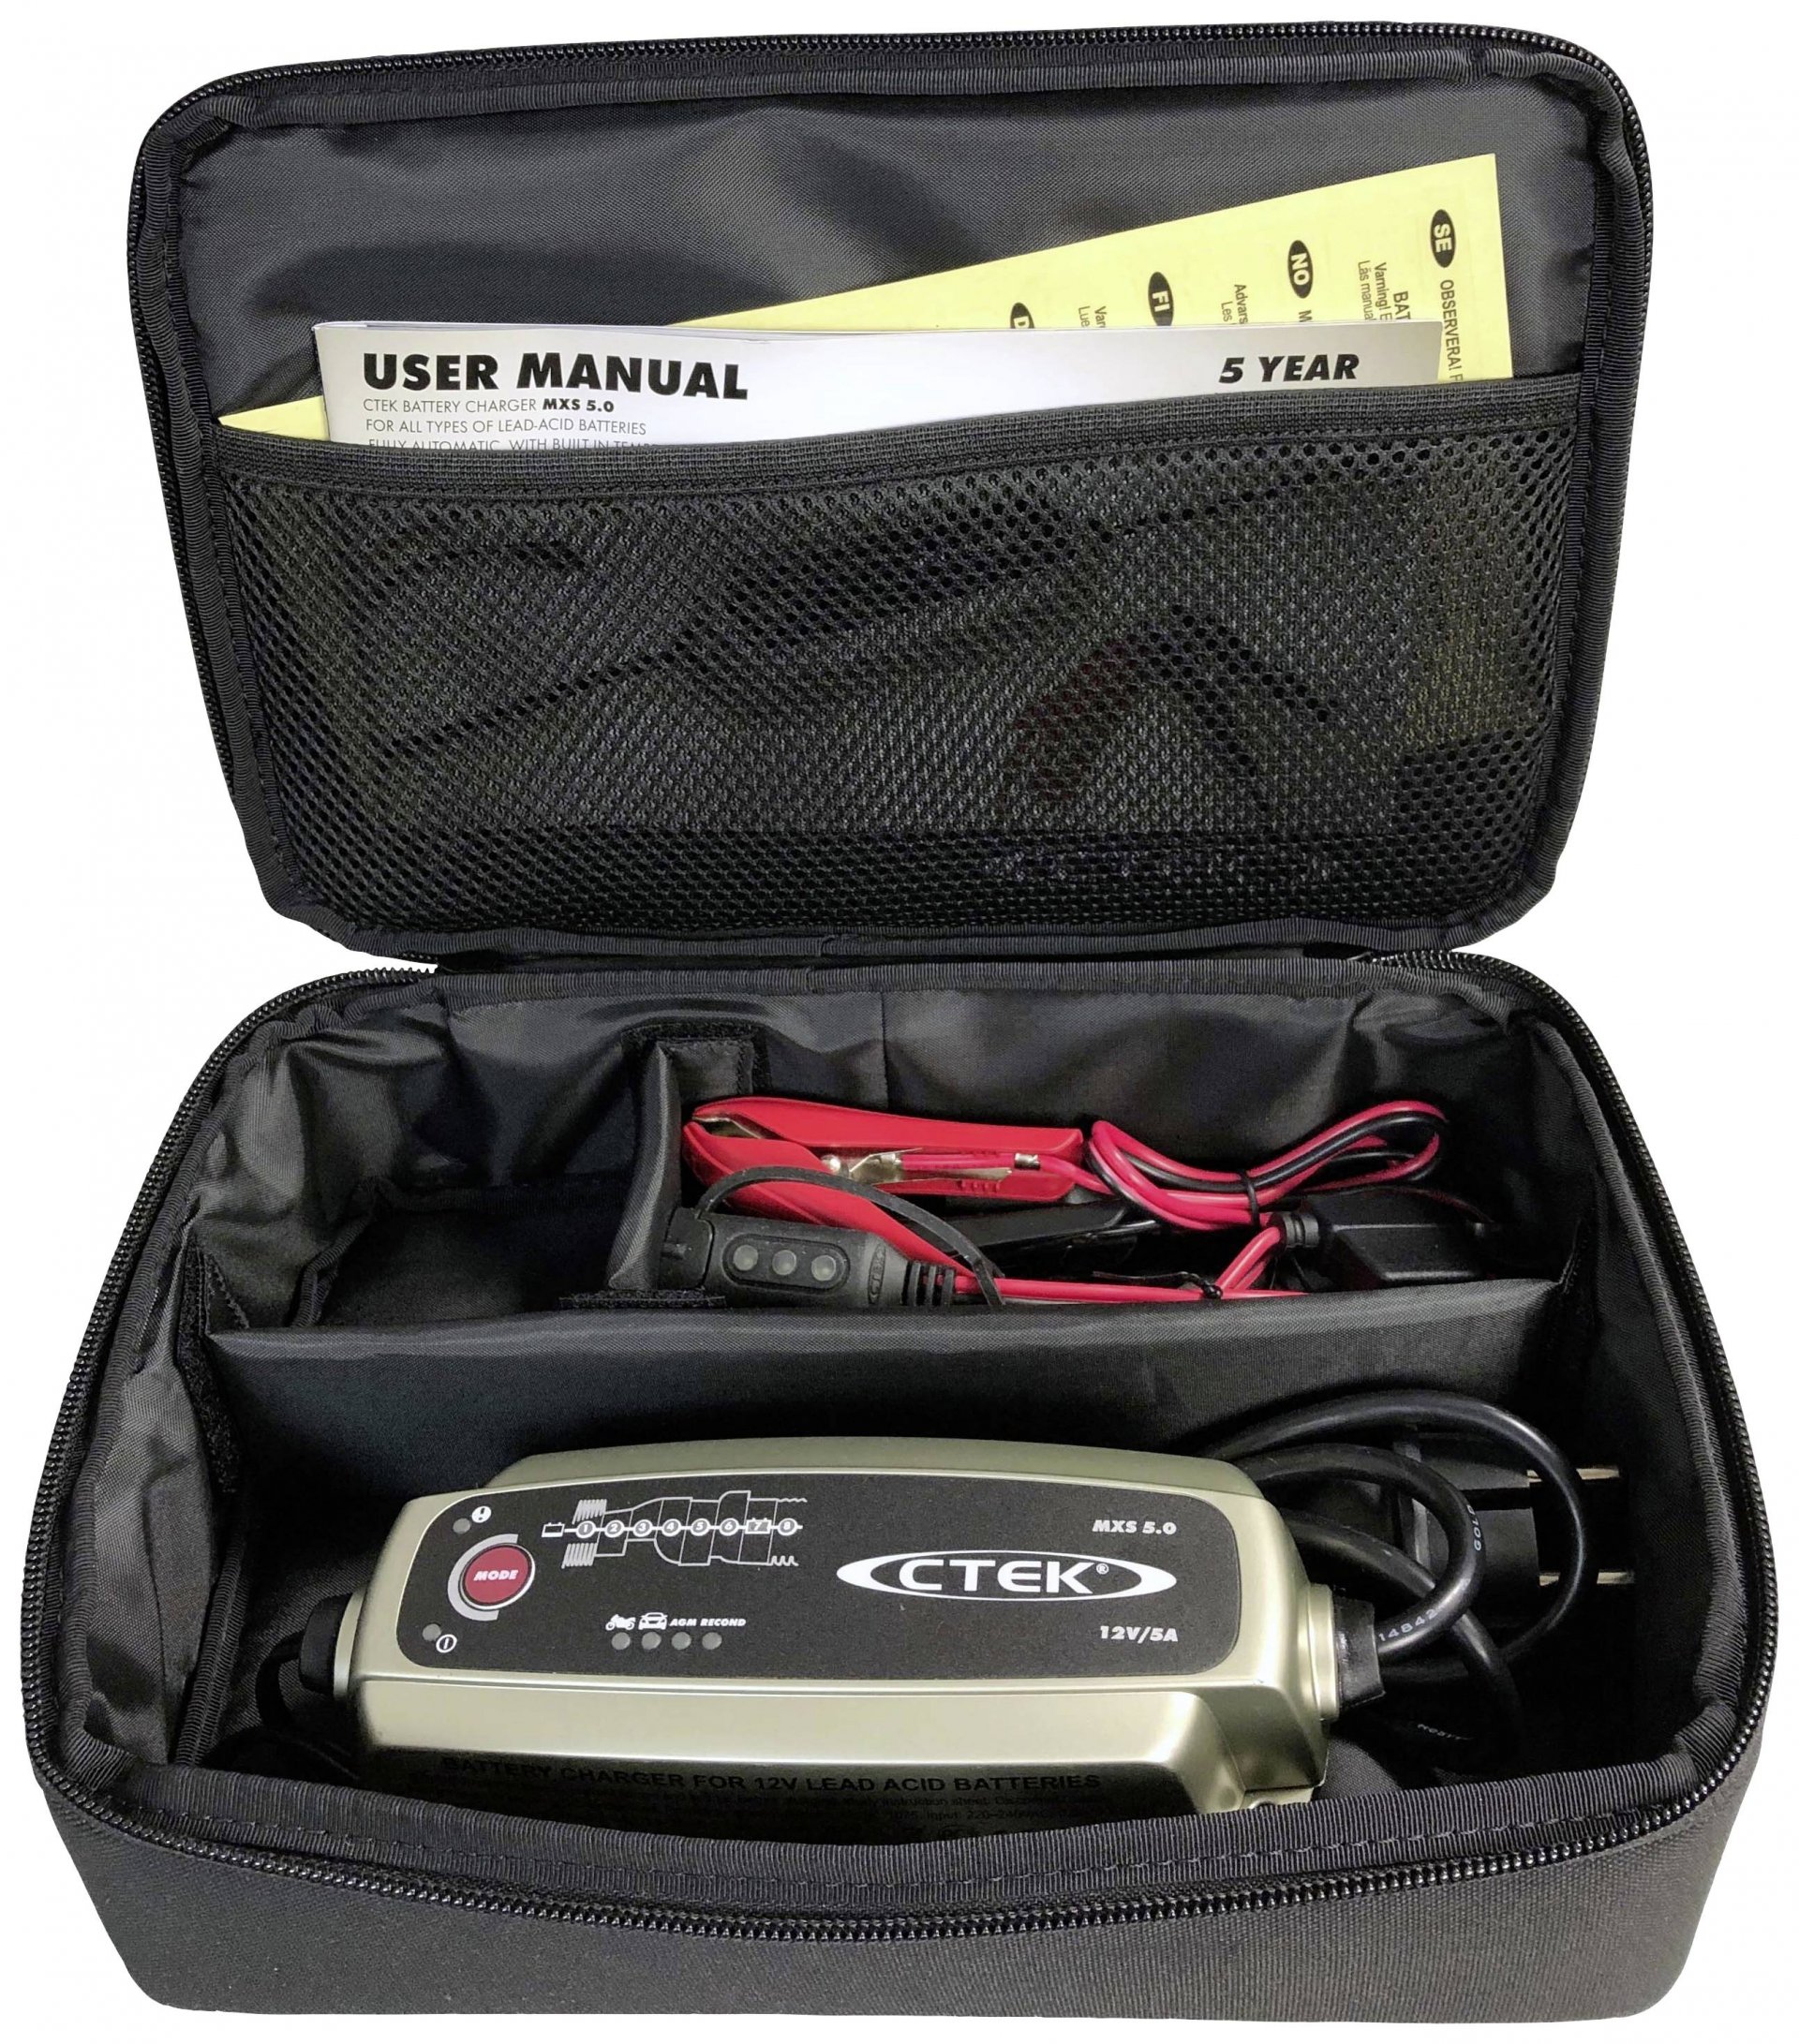 CTEK Smart Battery Charger from Sweden